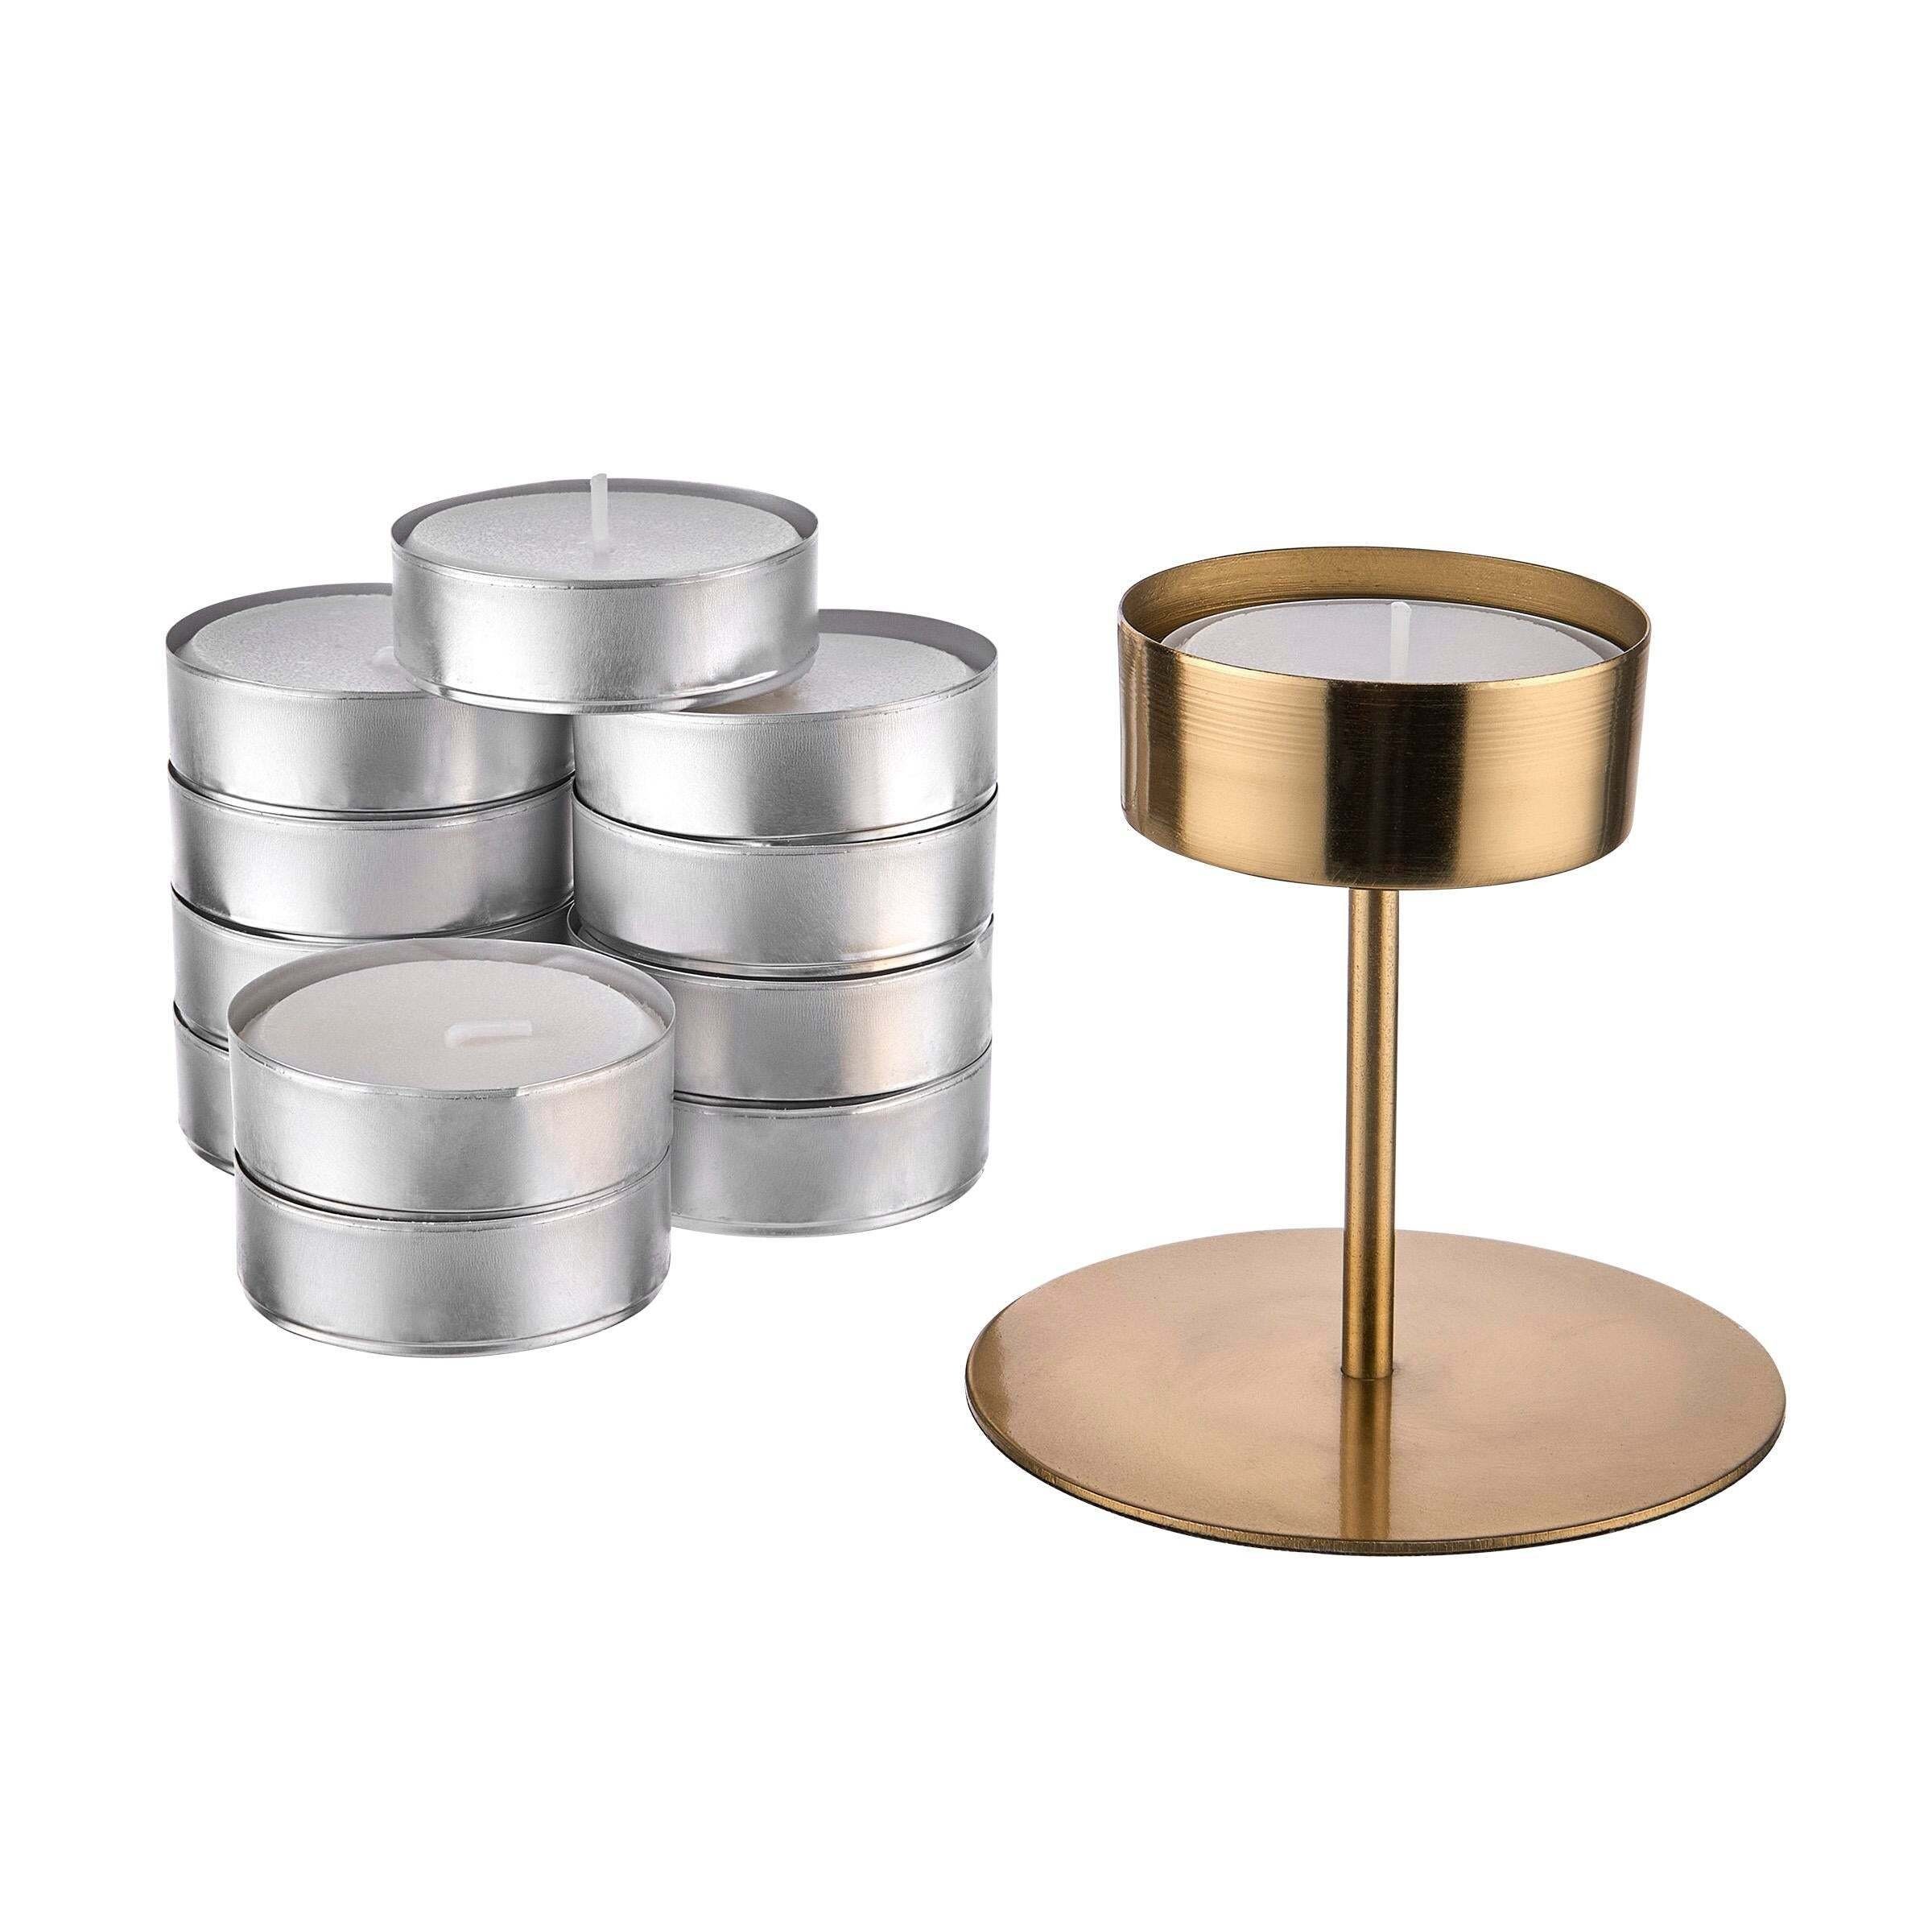 BUTLERS Kerzenhalter HIGHLIGHT Kerzenhalter & Maxi Teelicht-Set